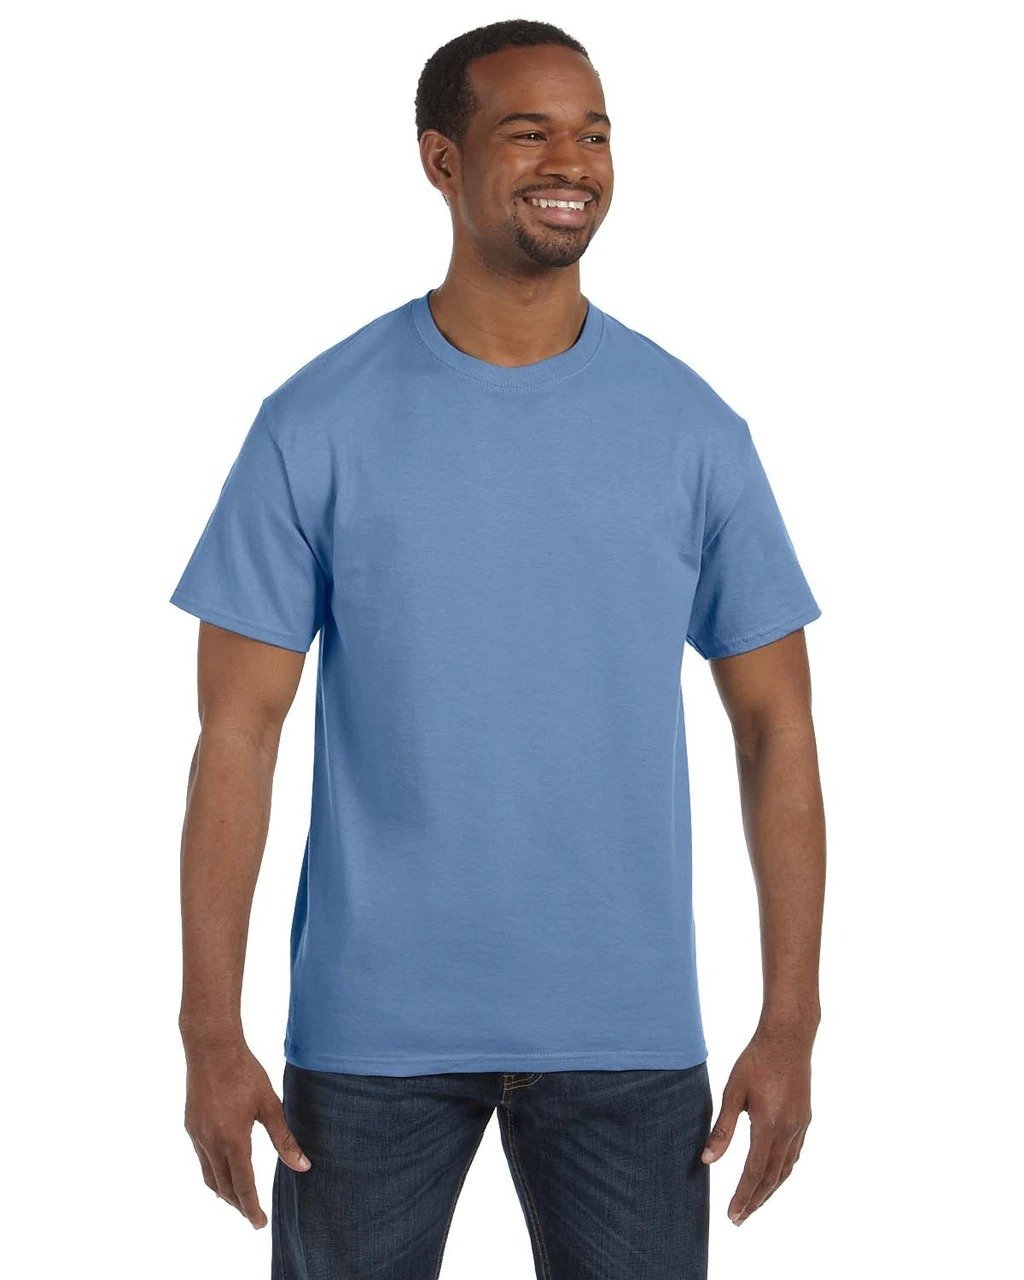 Gildan Adult Unisex Cotton Short Sleeve T-Shirt